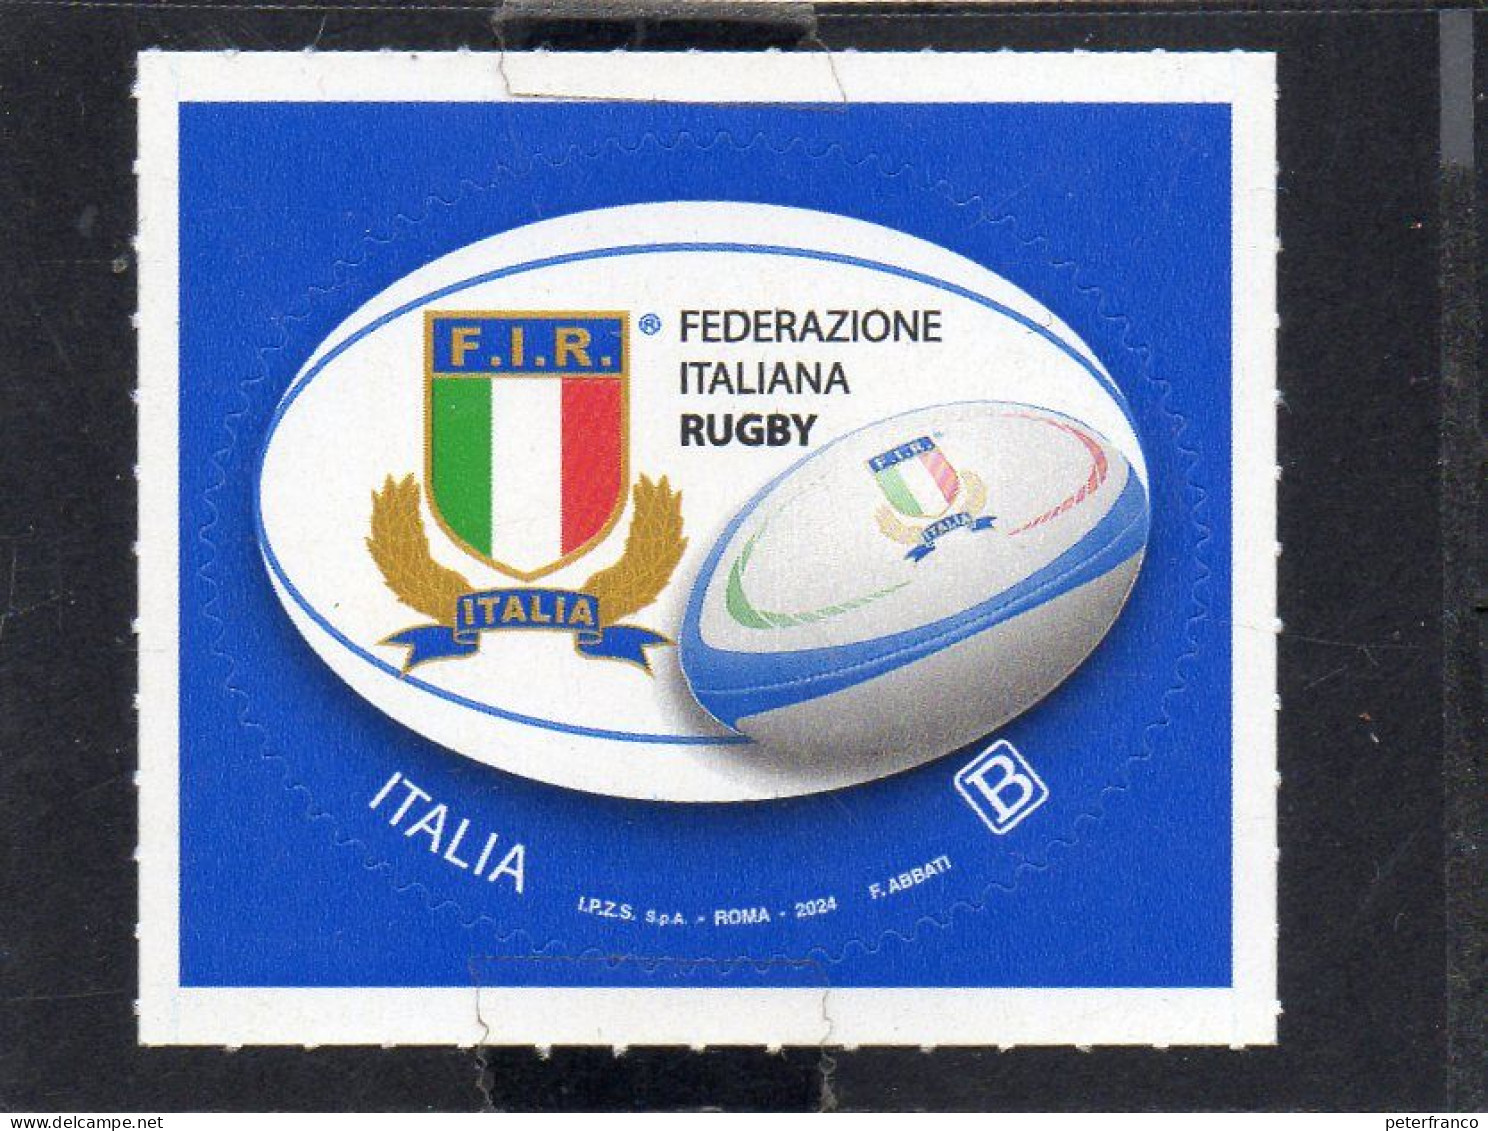 2024 Italia - Federazione Italiana Rugby - Rugby